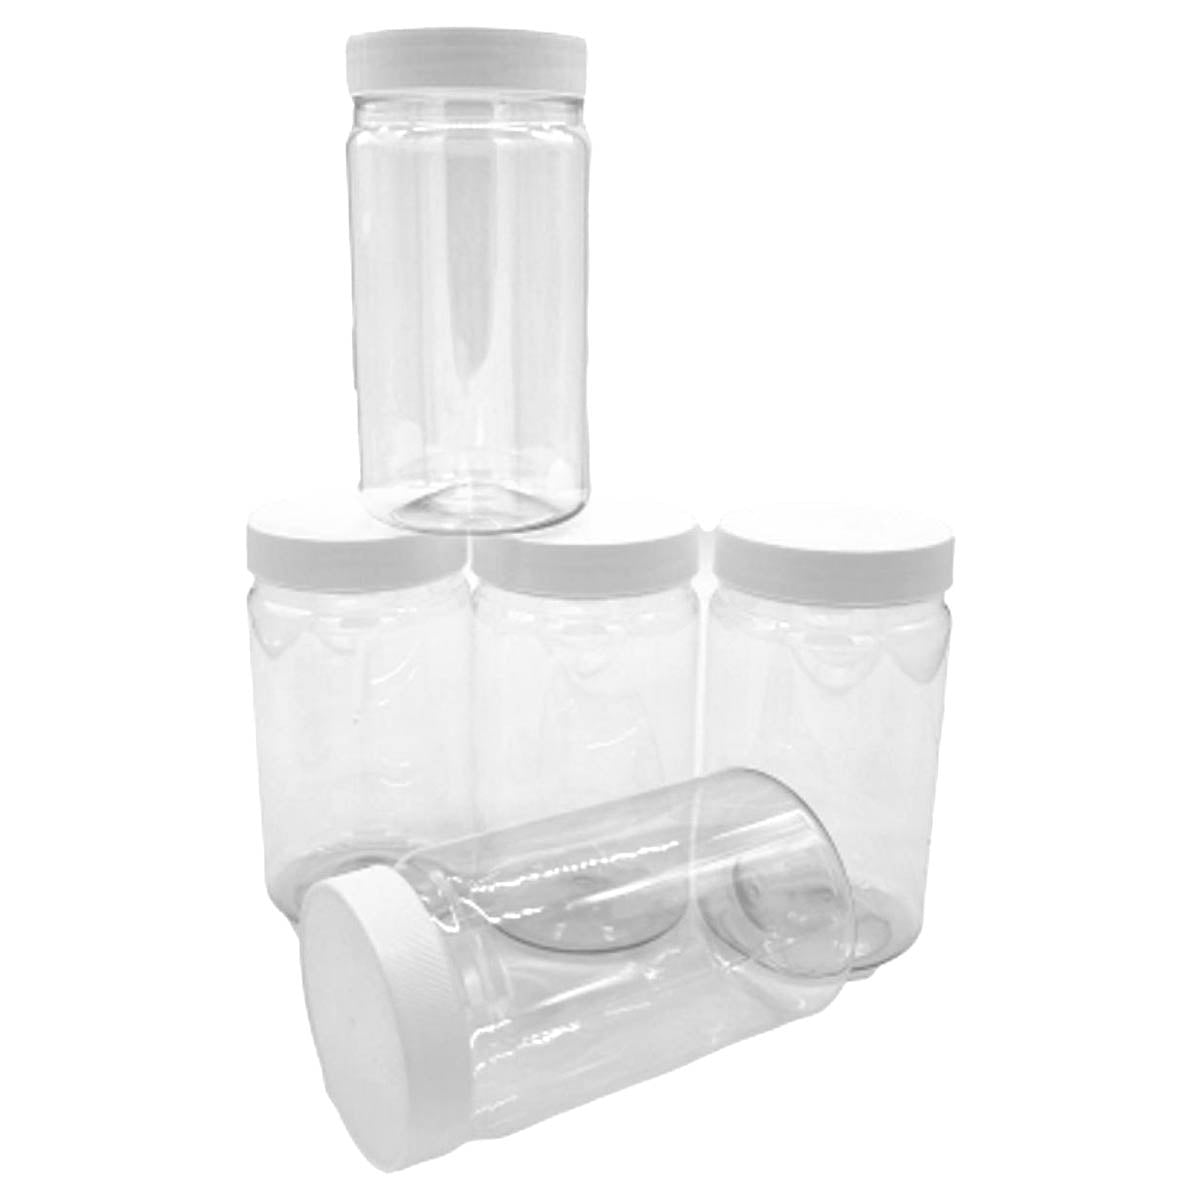 <tc>Ariko</tc> Jar | Lightweight plastic jar with screw lid | 750ml | Jar with white lid | Stock jar | Refillable